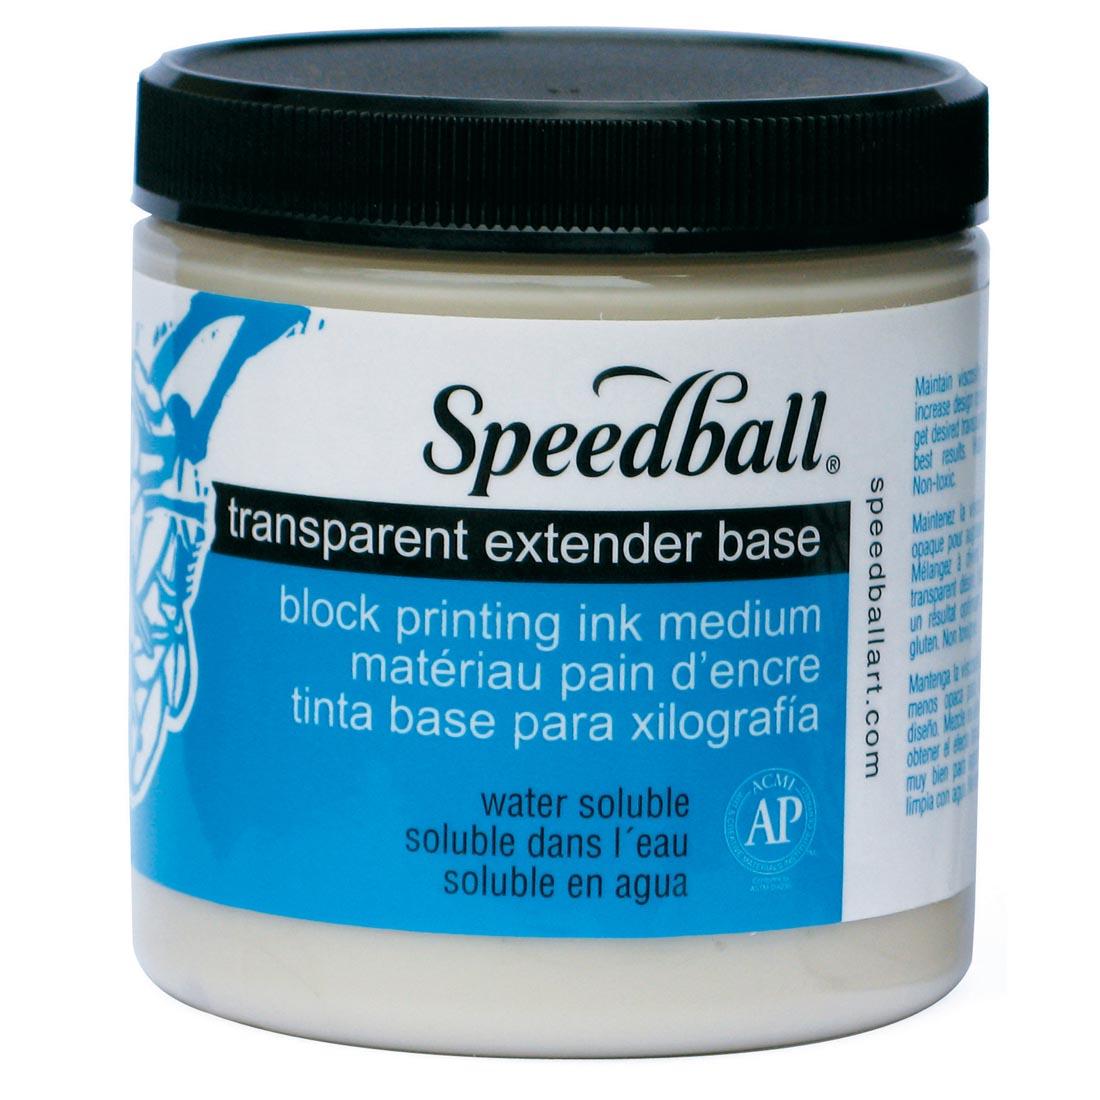 Speedball Water-Soluble Block Printing Ink Transparent Extender